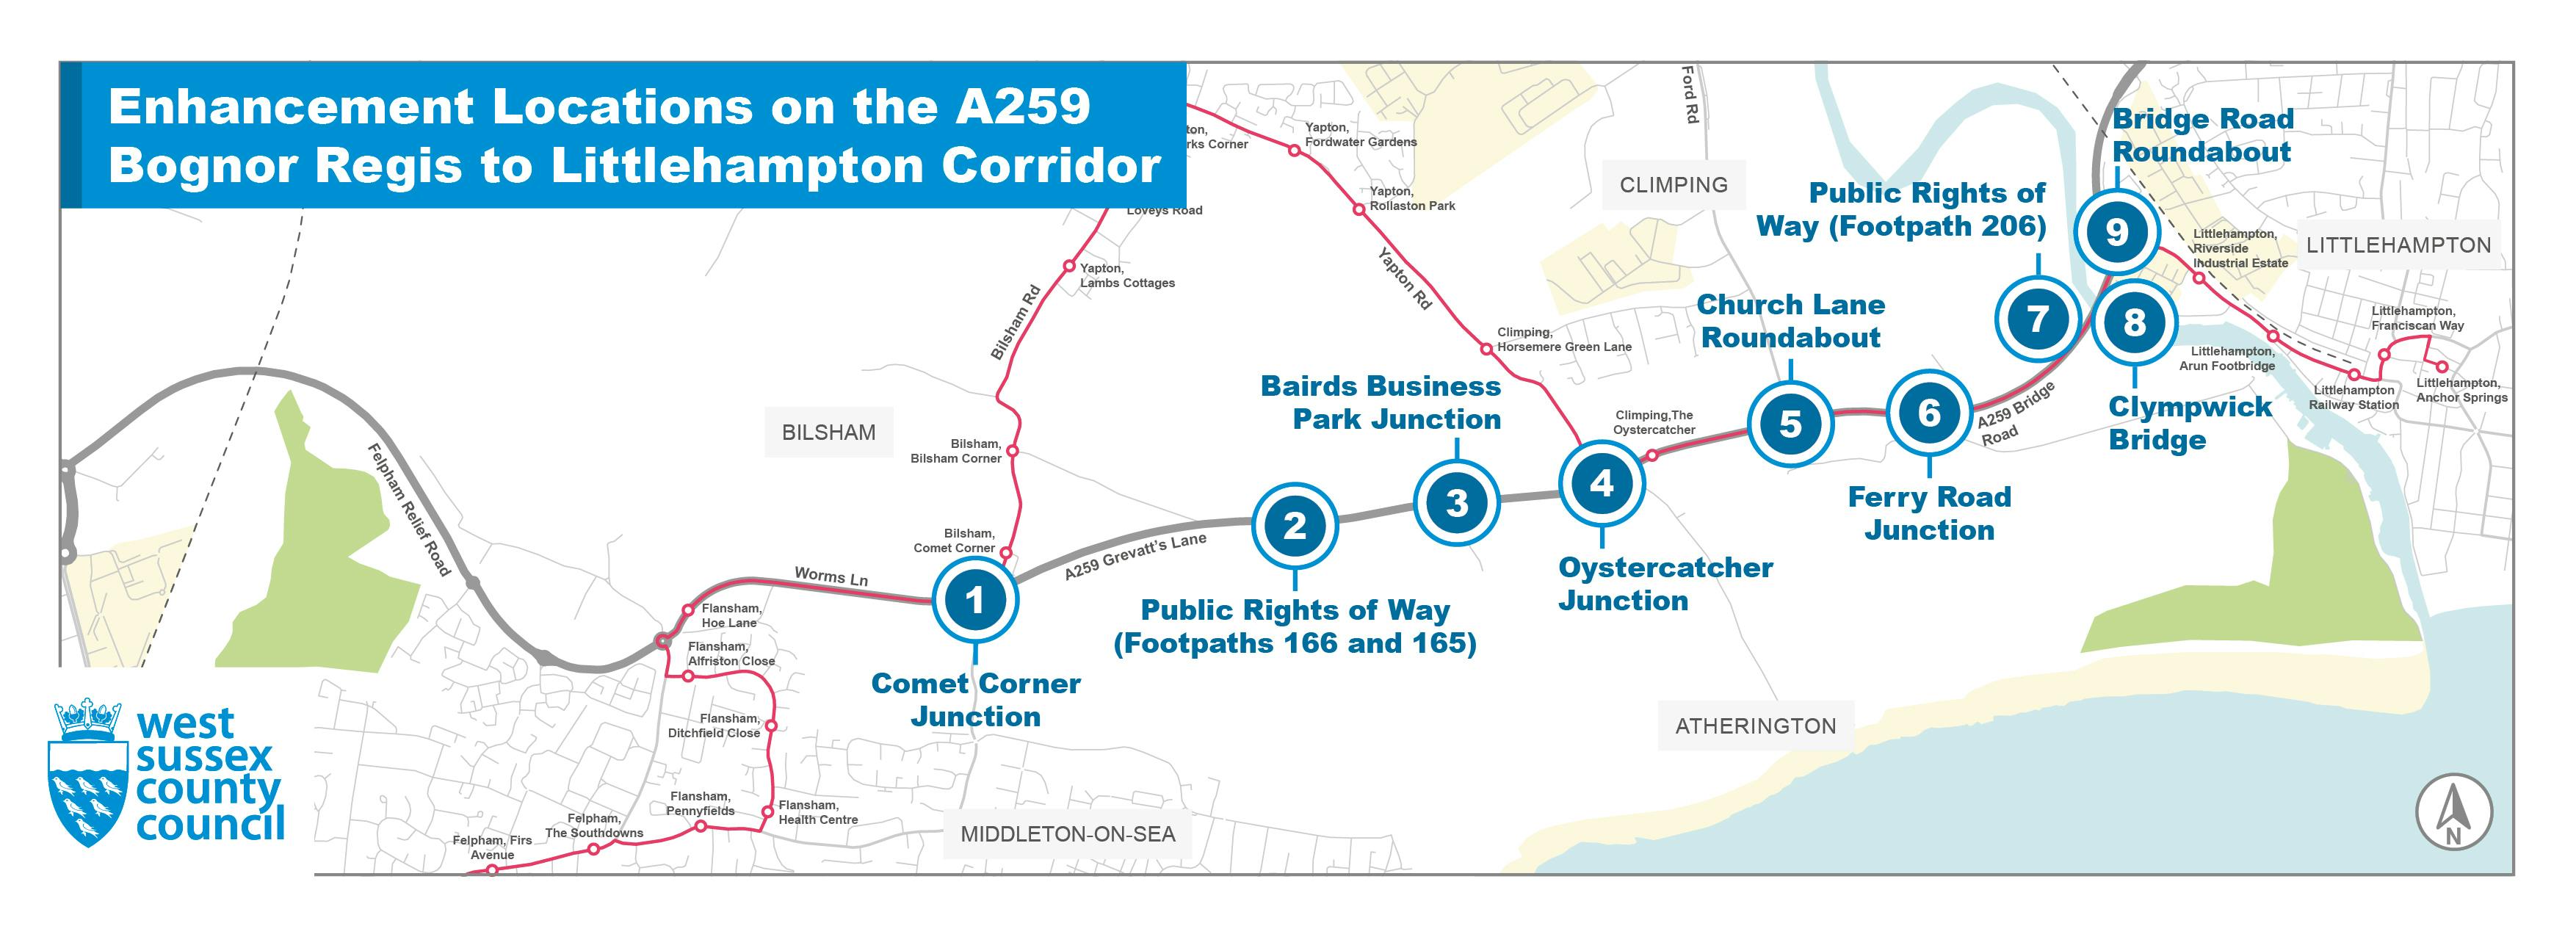 Image of the Enhancement Locations on the A259 Bognor Regis to Littlehampton Corridor